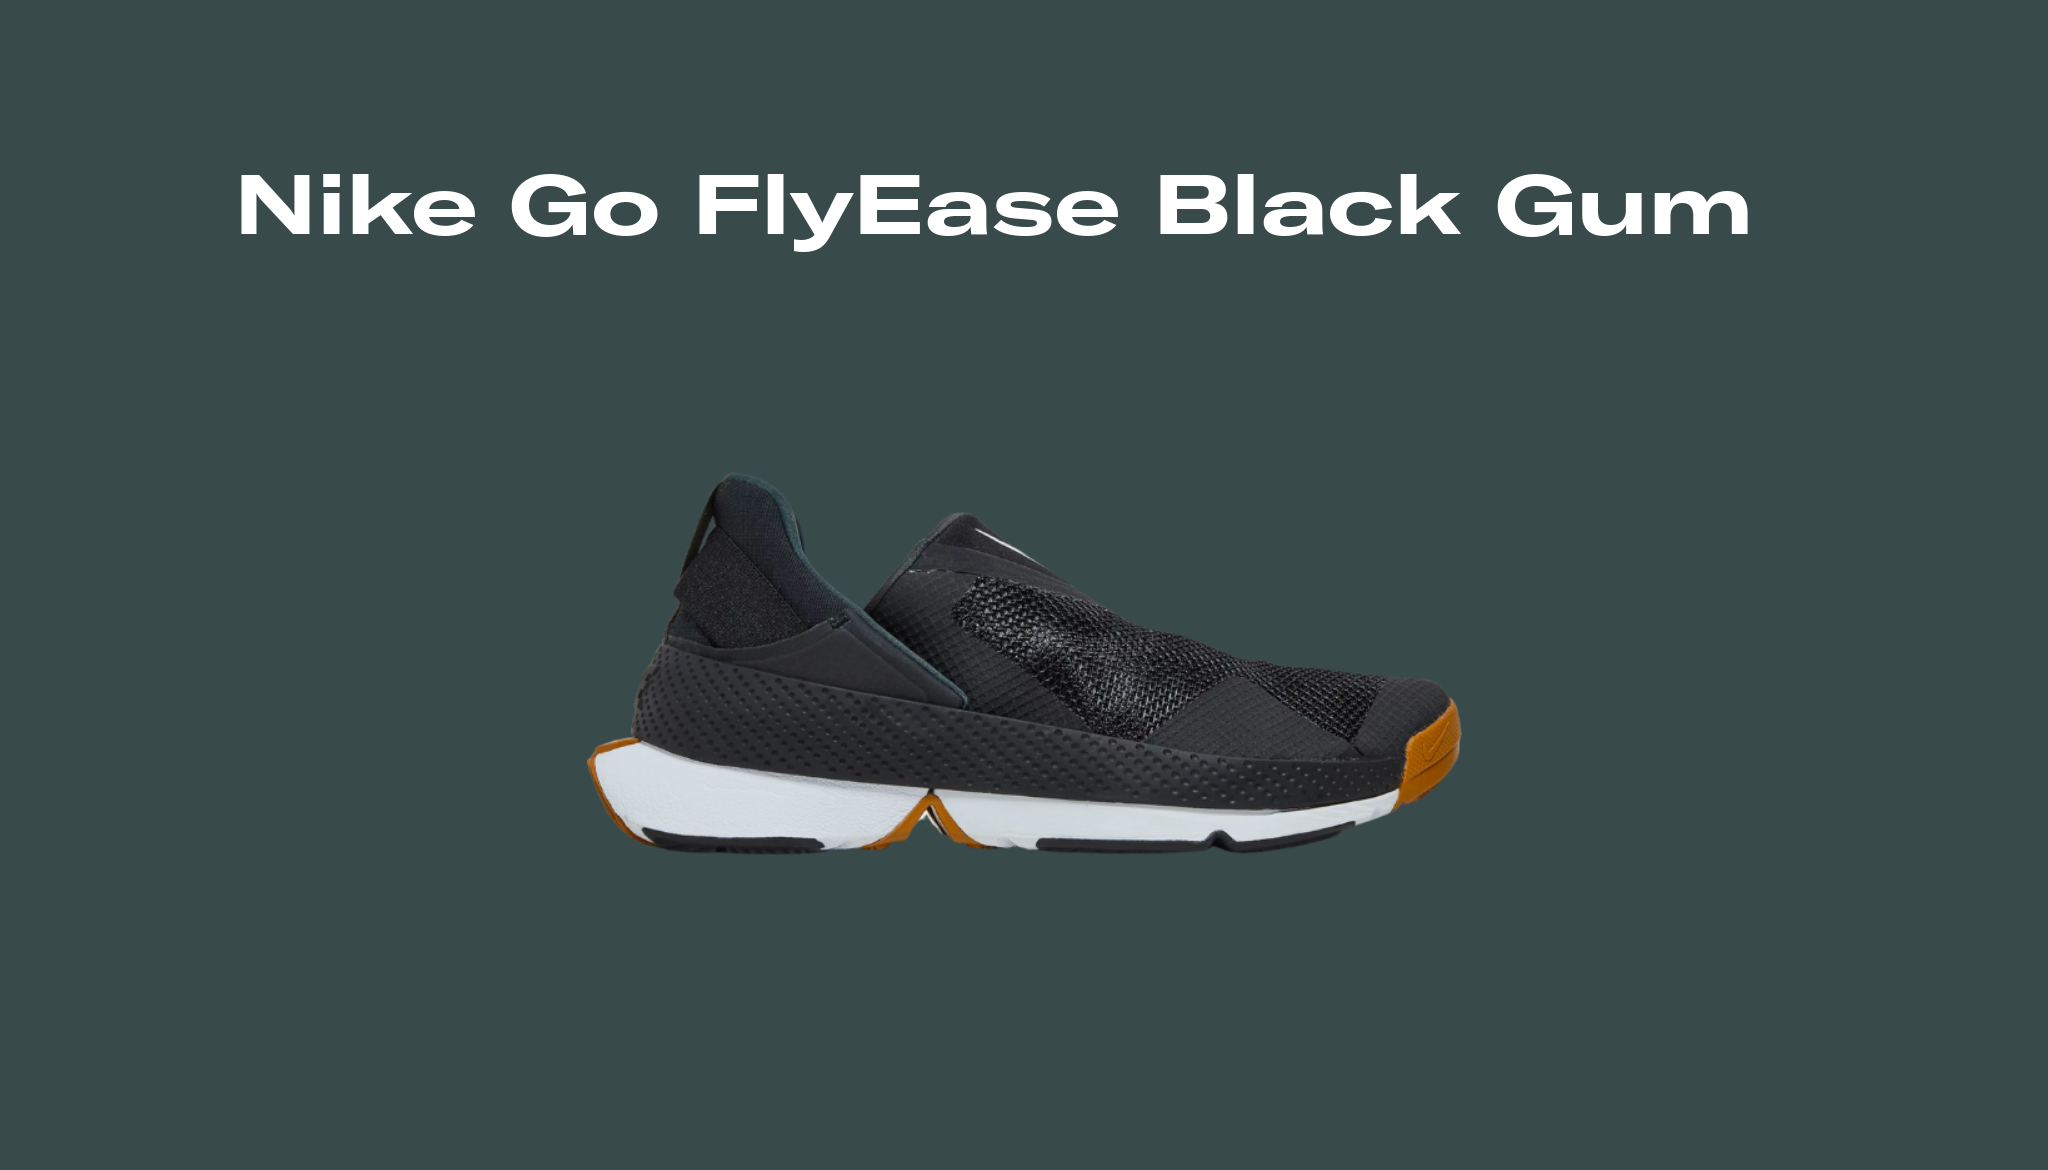 Nike Go FlyEase Black Gum, Raffles and Release Date | Sole Retriever